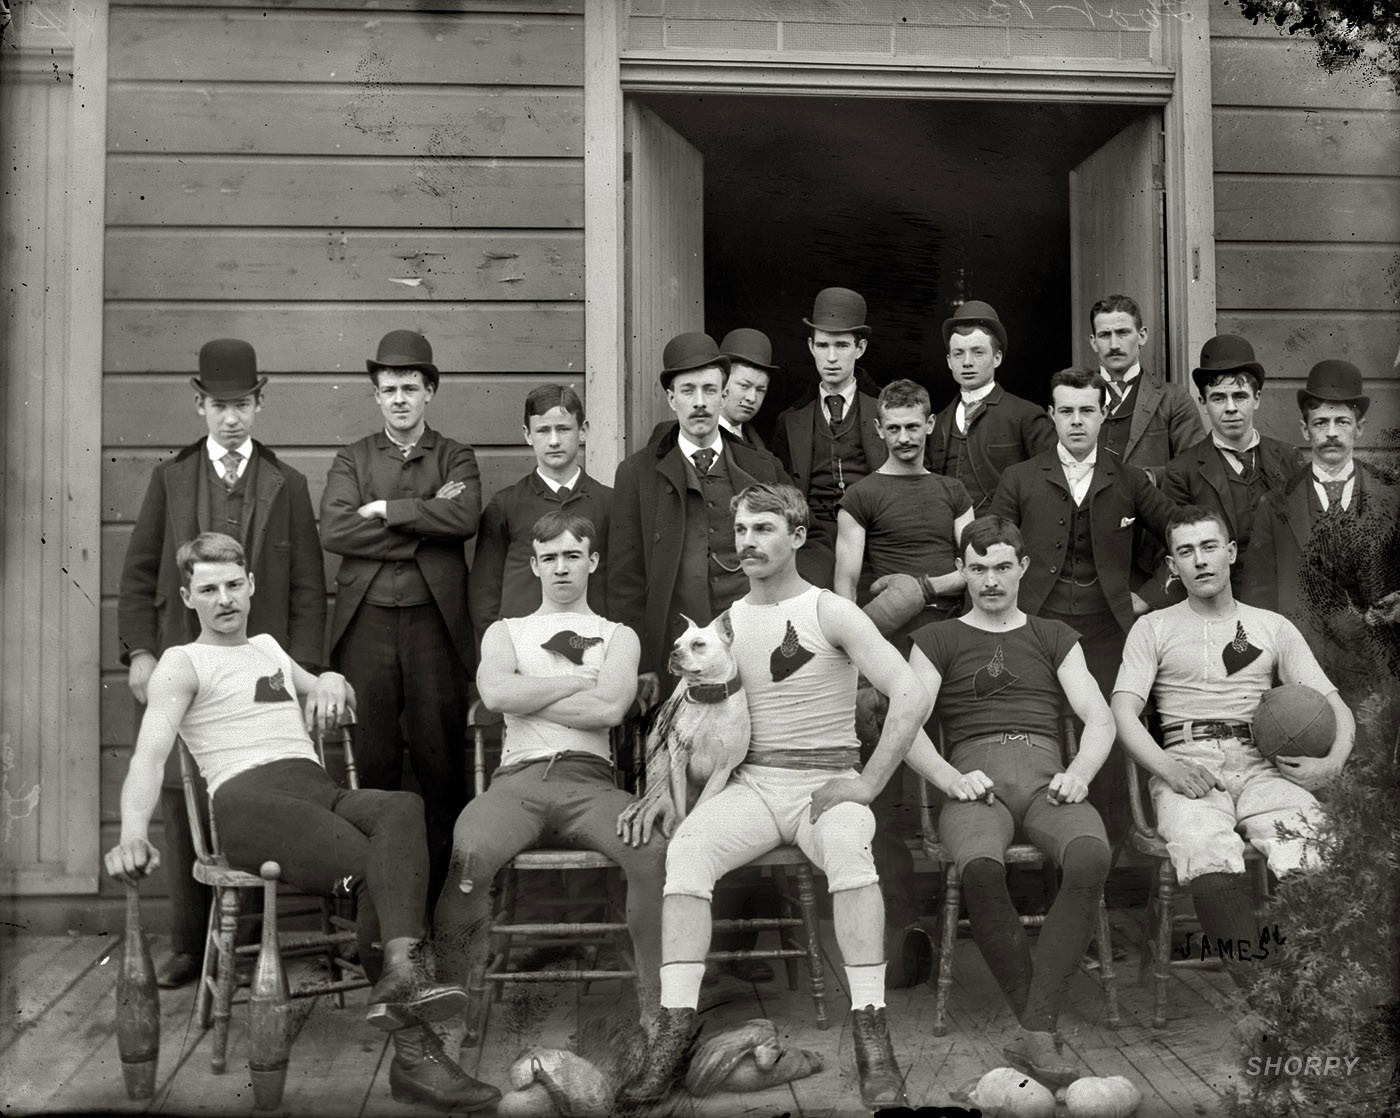 "Football team. Circa 1895-1910